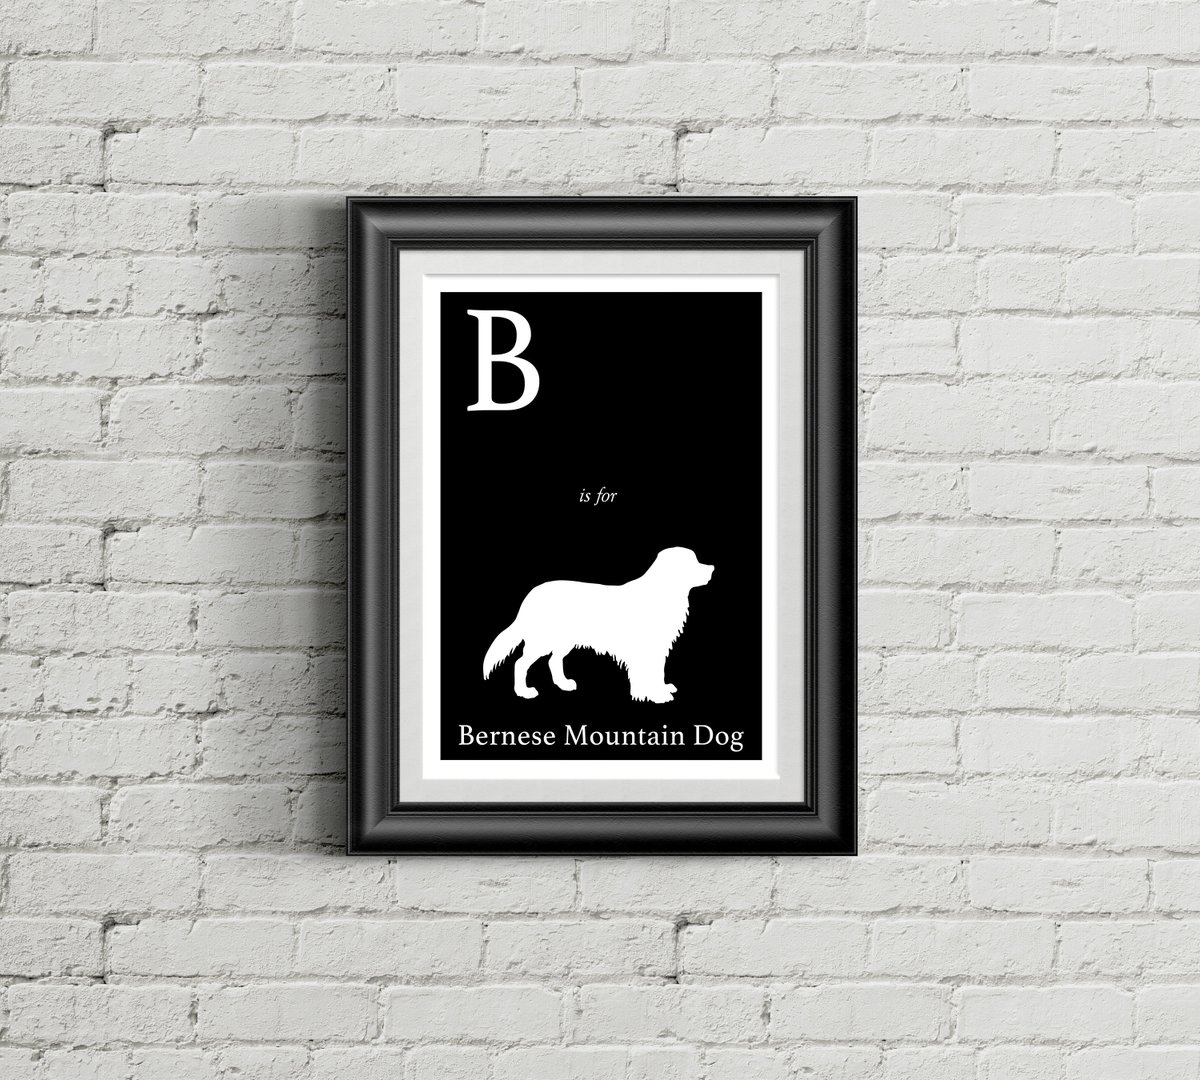 Alphabet Art Print - dog art print - B is for Beagle Art Print - nursery art - dog silhouette art print - dog wall art etsy.com/sophisticatedp… #doglover #dogs #doglovergifts #Etsy #fairewholesaler #wholesale #sophisticatedpup #GraphicArtPrint